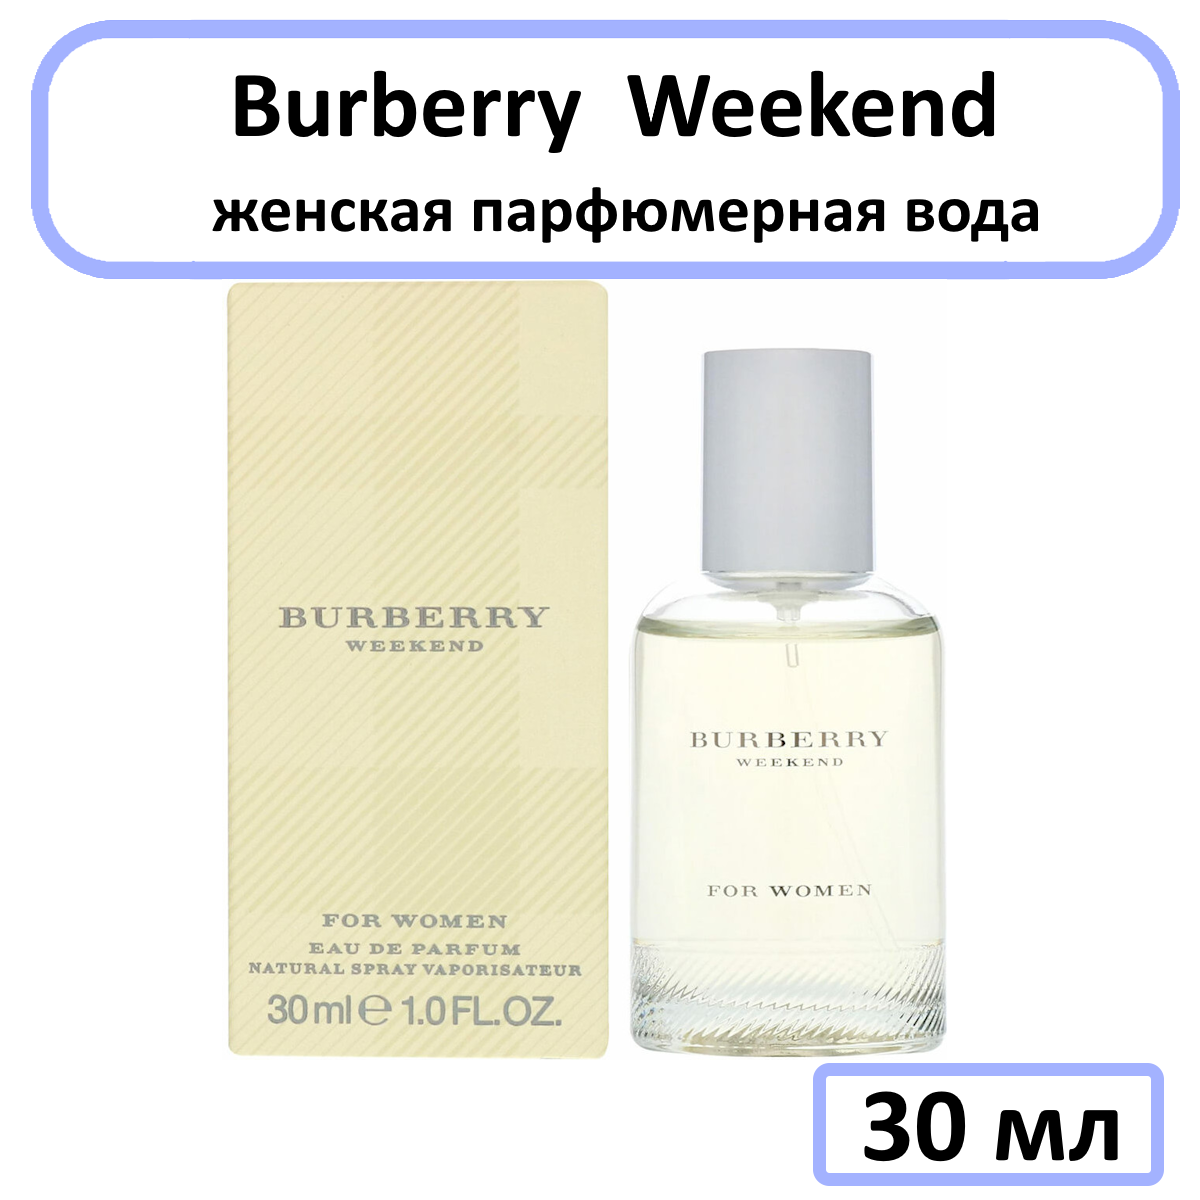 Burberry Weekend for Women - парфюмерная вода, 30 мл